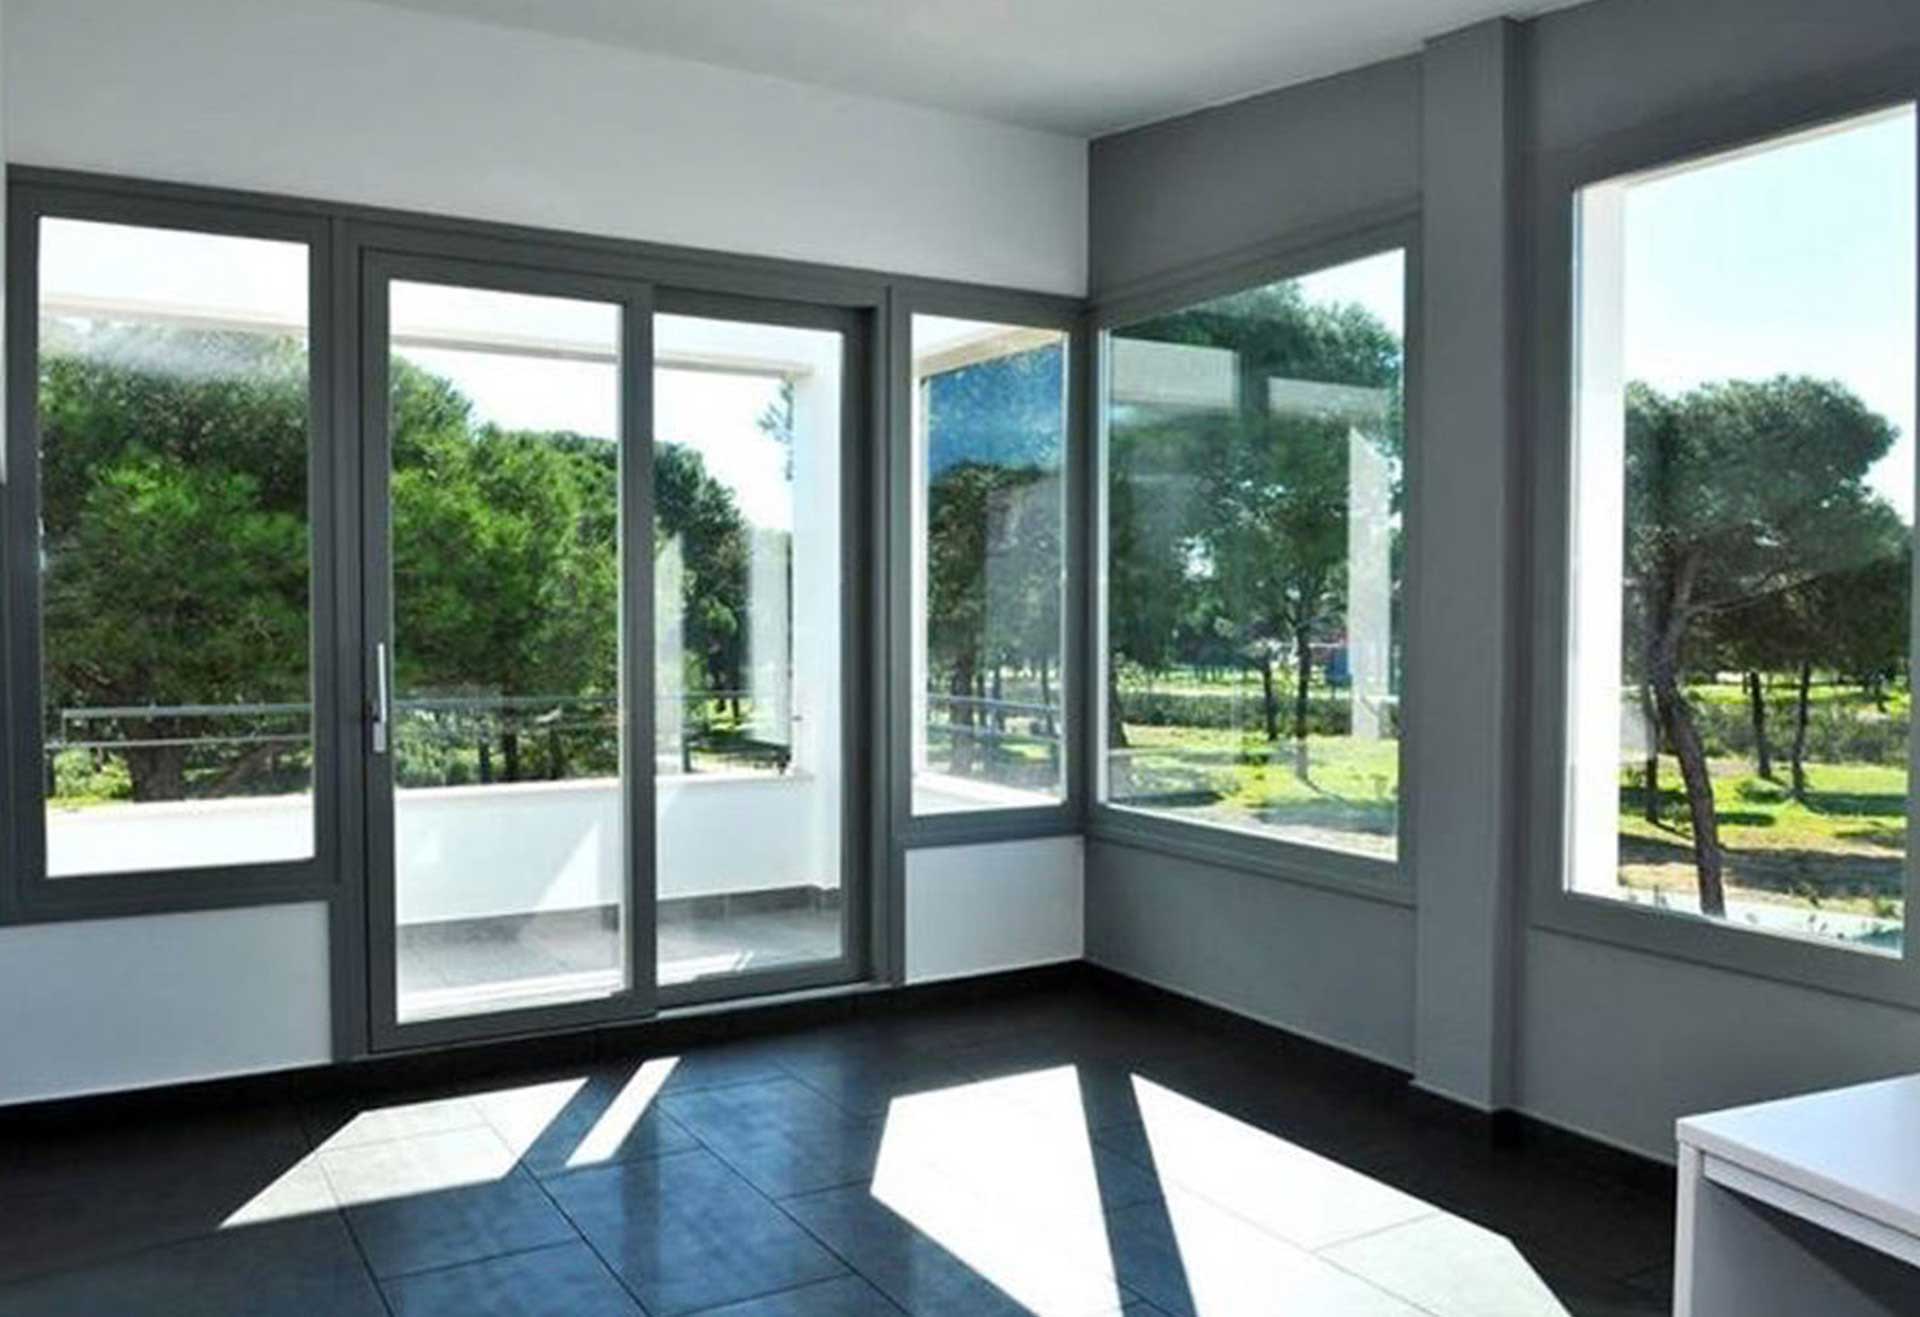 A home with hurricane impact sliding doors. Impact sliding doors concept image